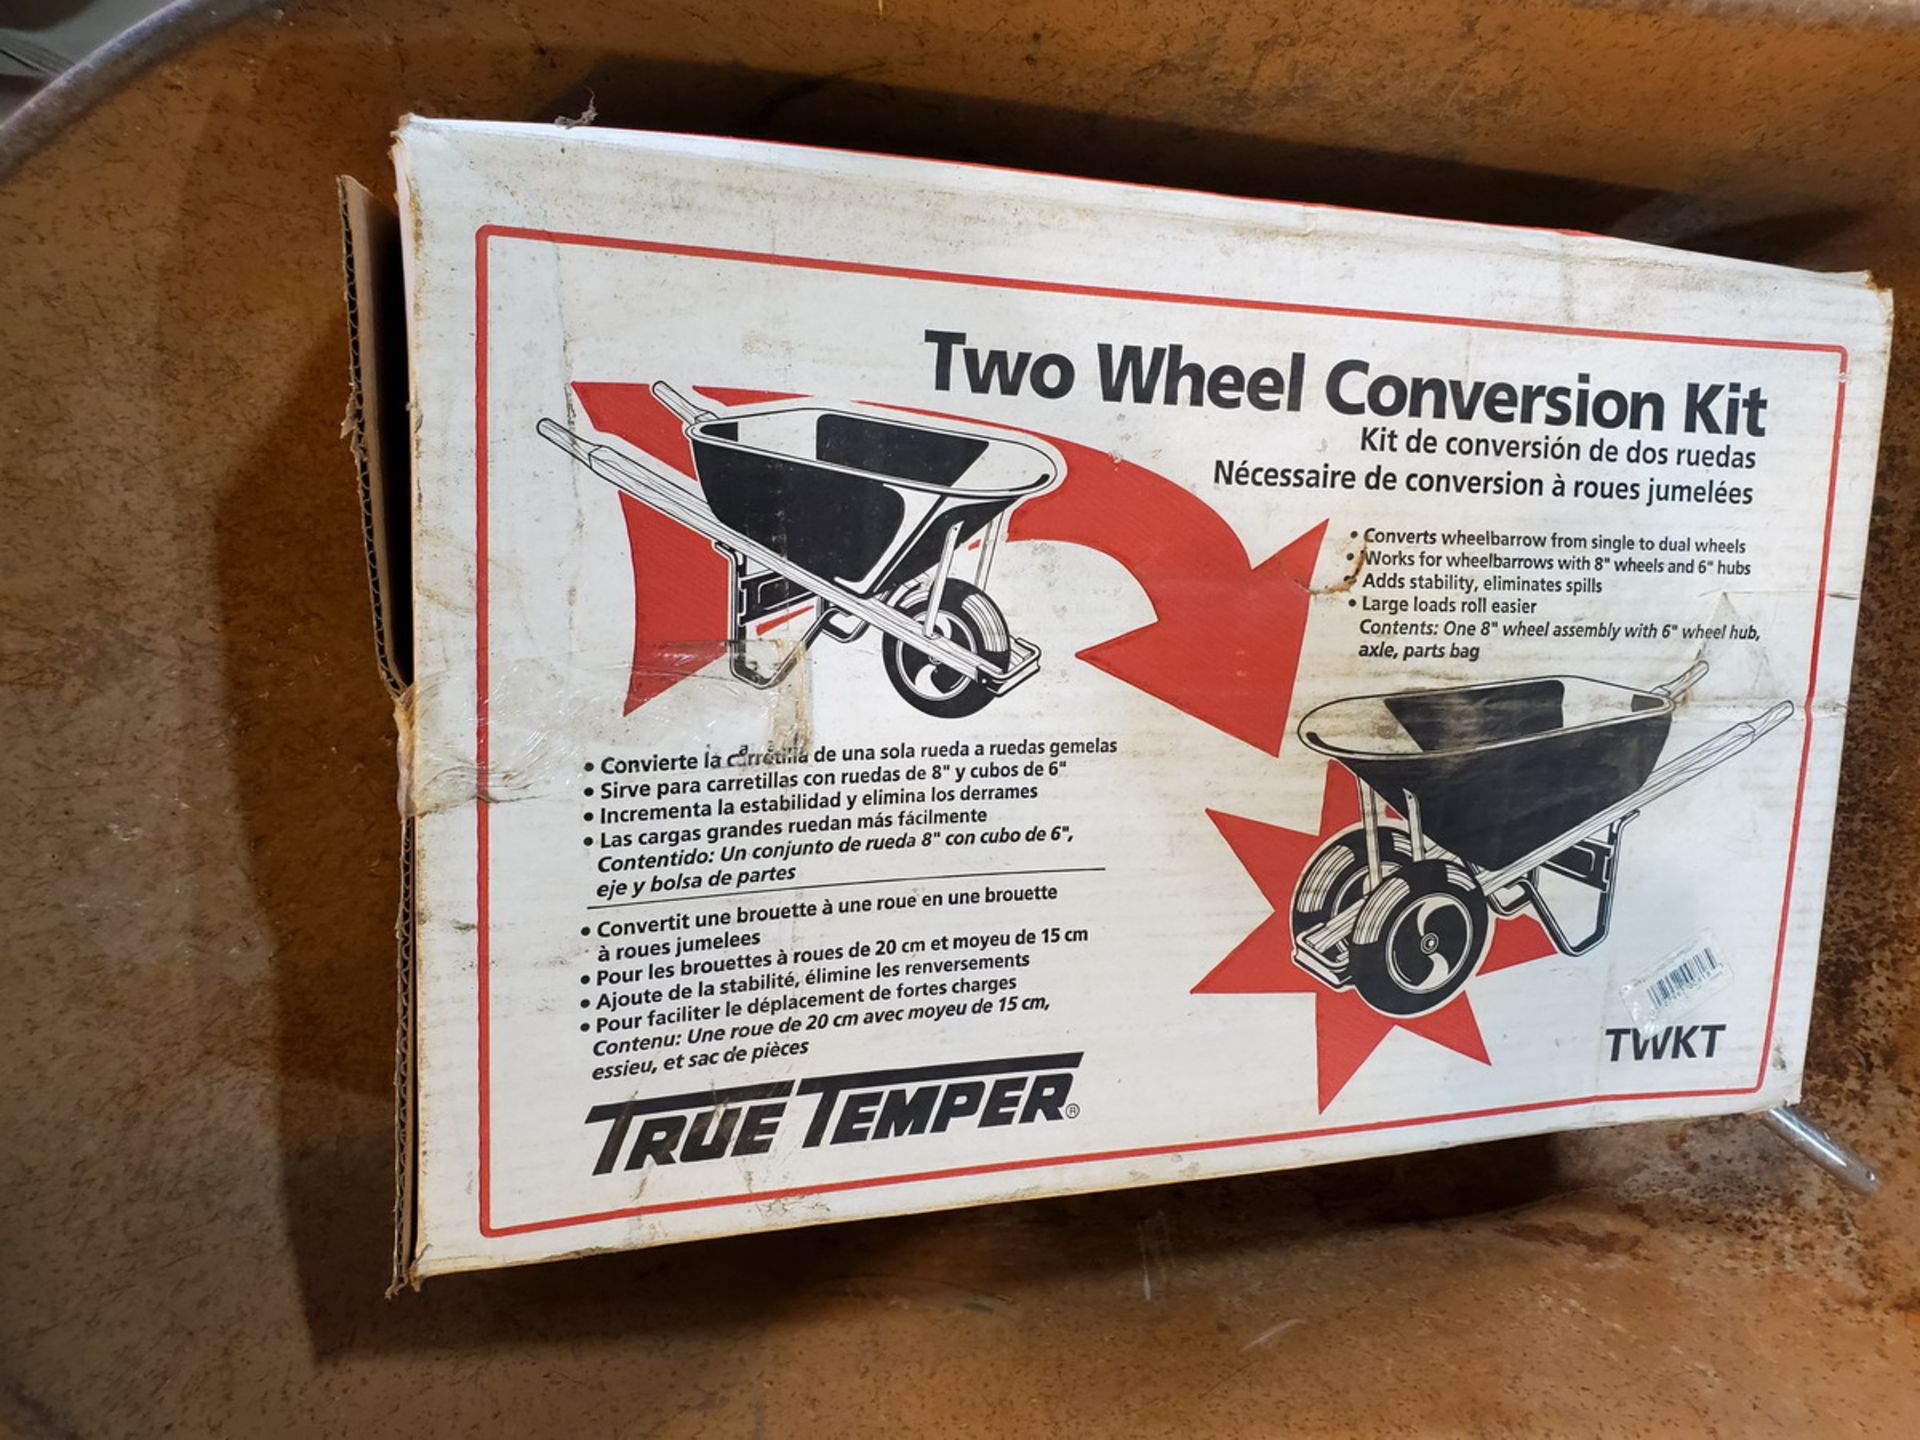 True Temper Wheel Barrow W/ (1) 2-Wheel Conversion Kit - Image 2 of 2